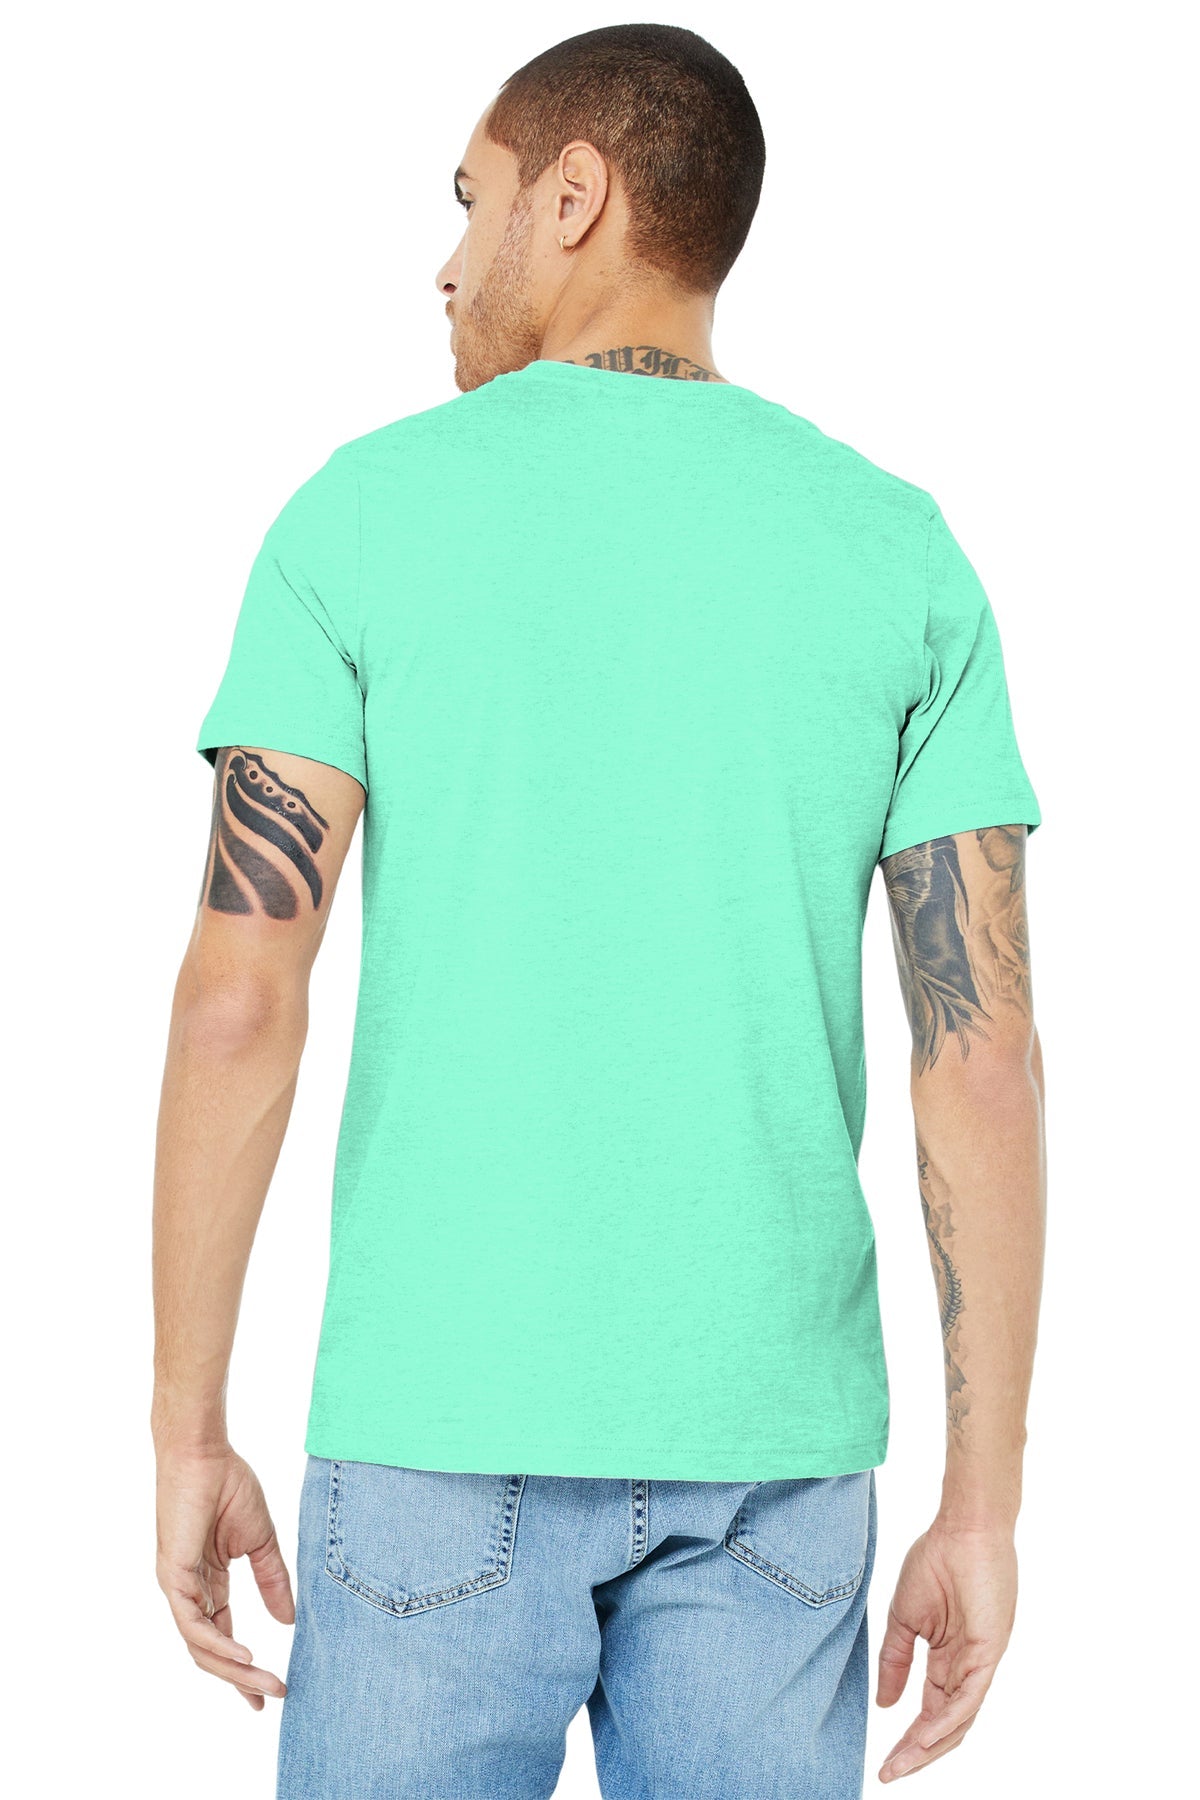 bella + canvas unisex jersey short sleeve t-shirt 3001c heather mint